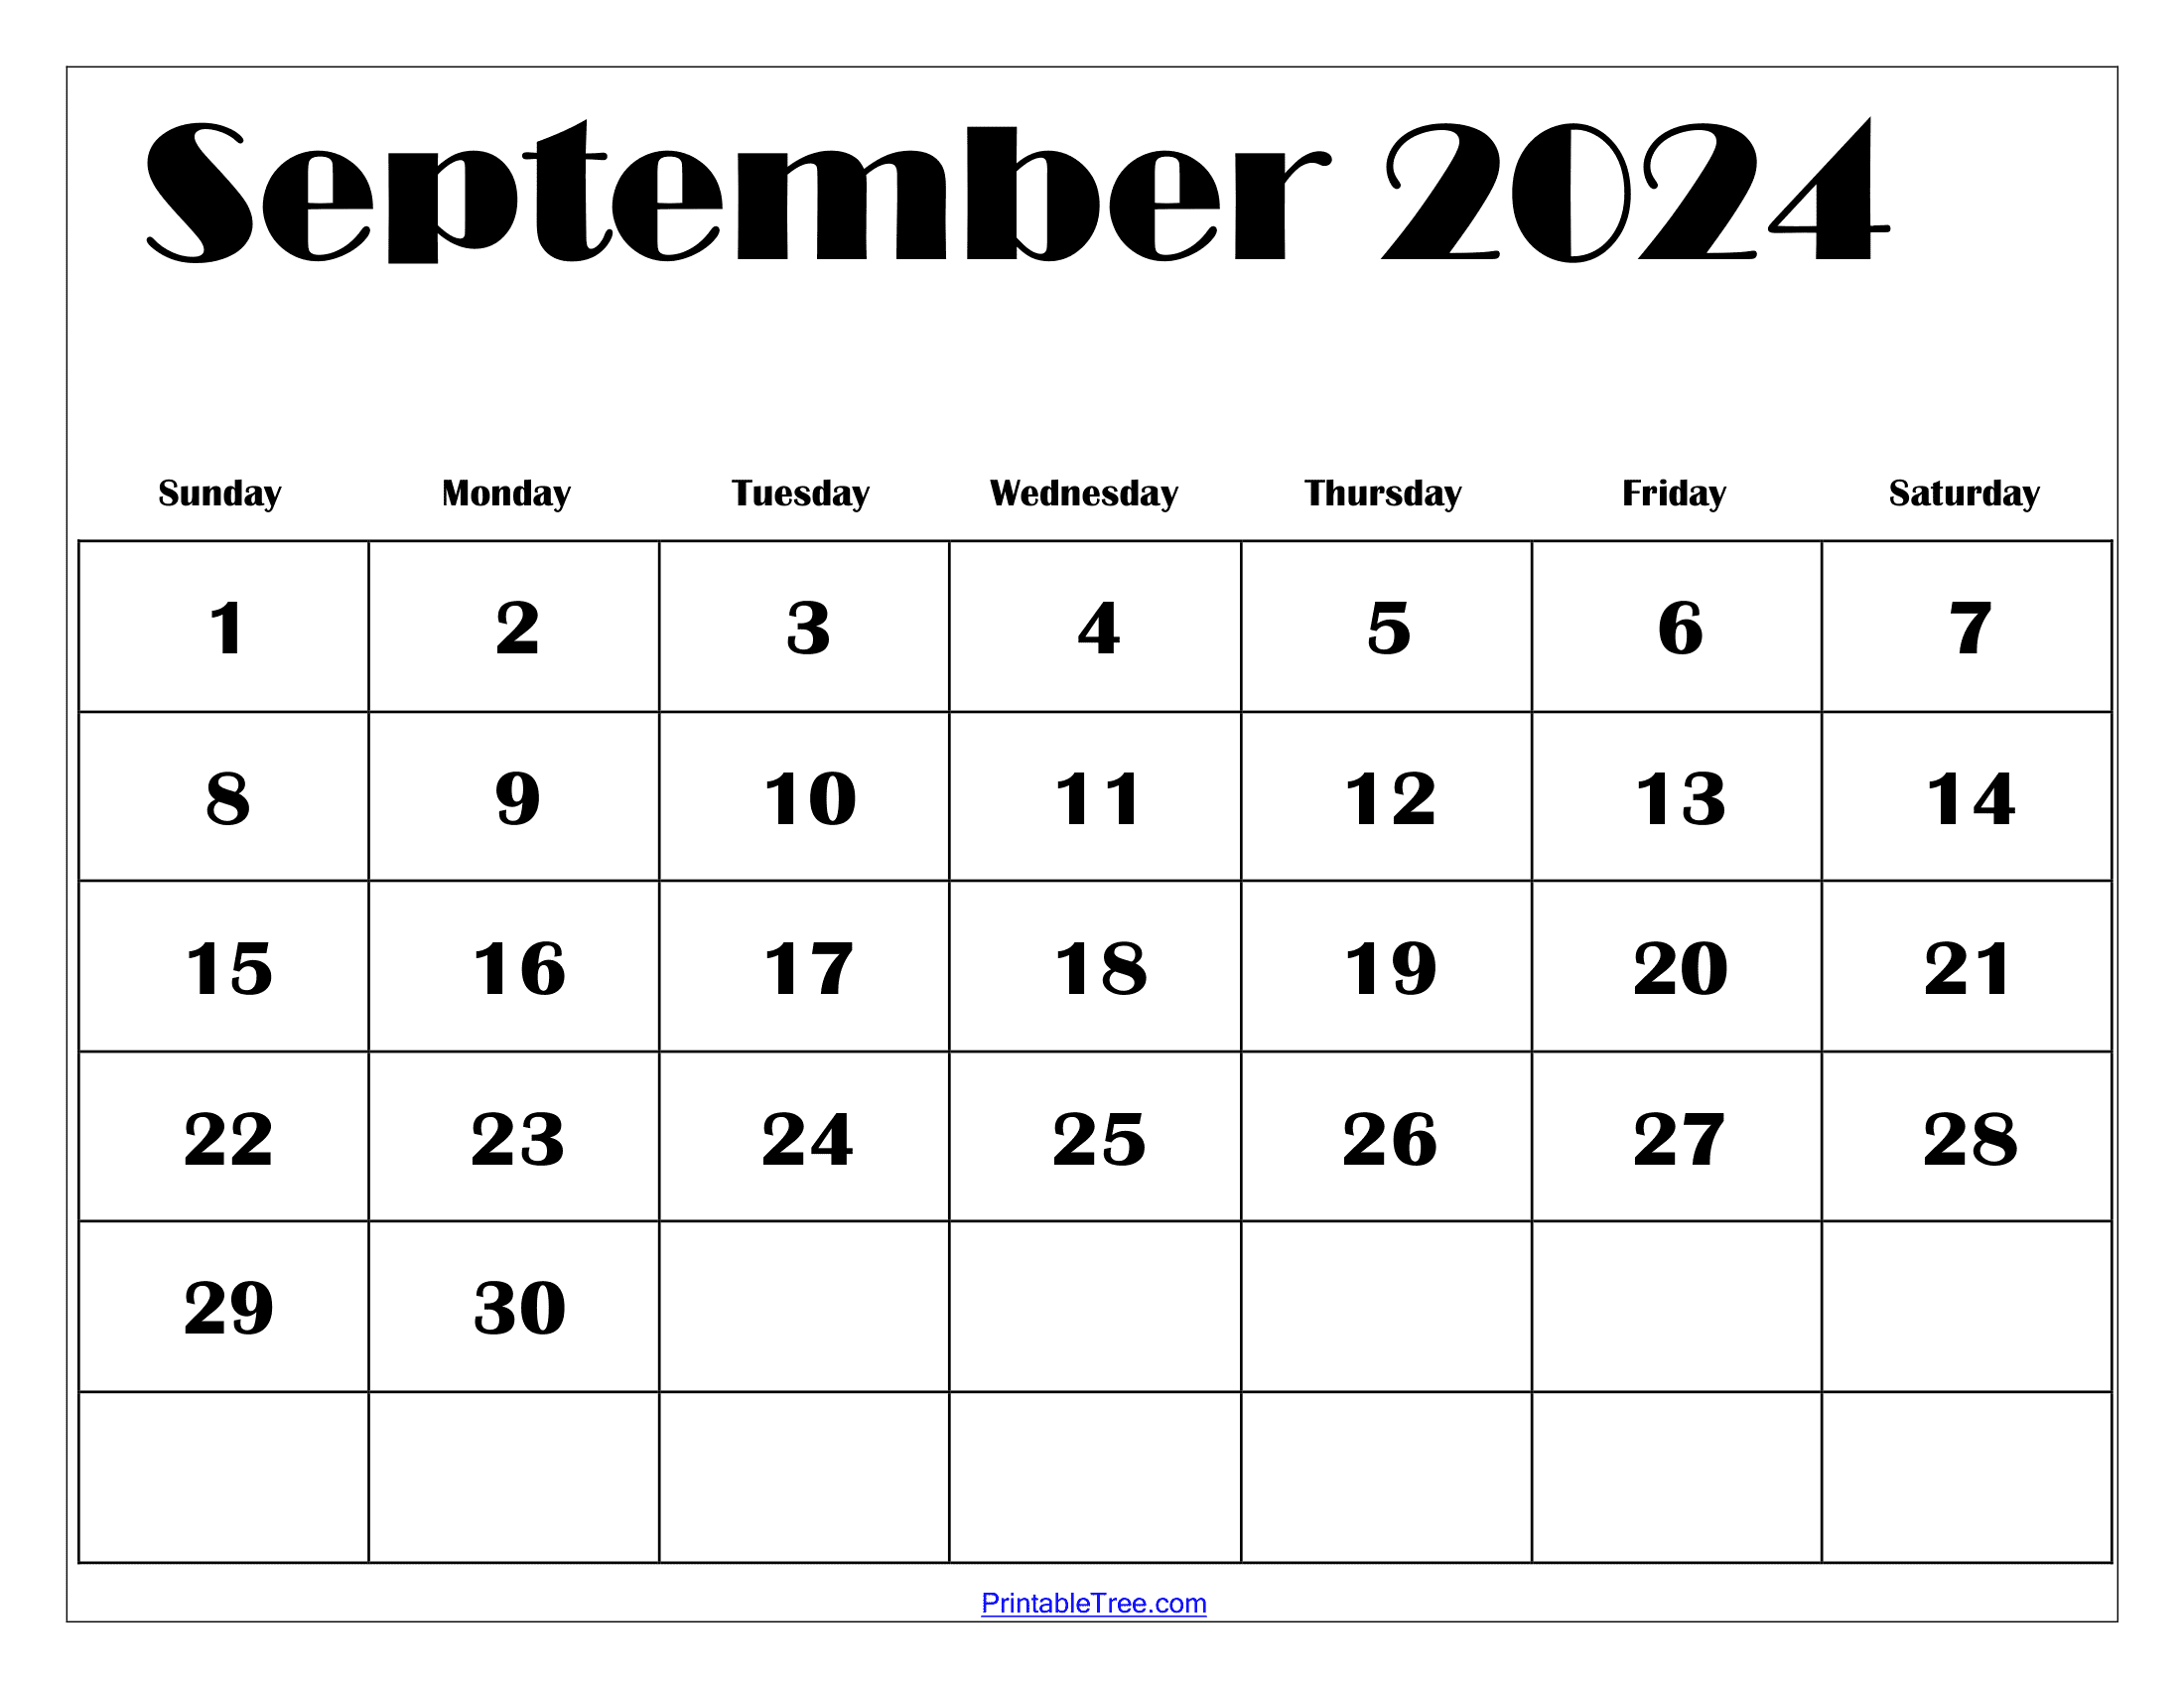 September 2024 Calendar Printable Pdf With Holidays for September 2024 Calendar Printable Free